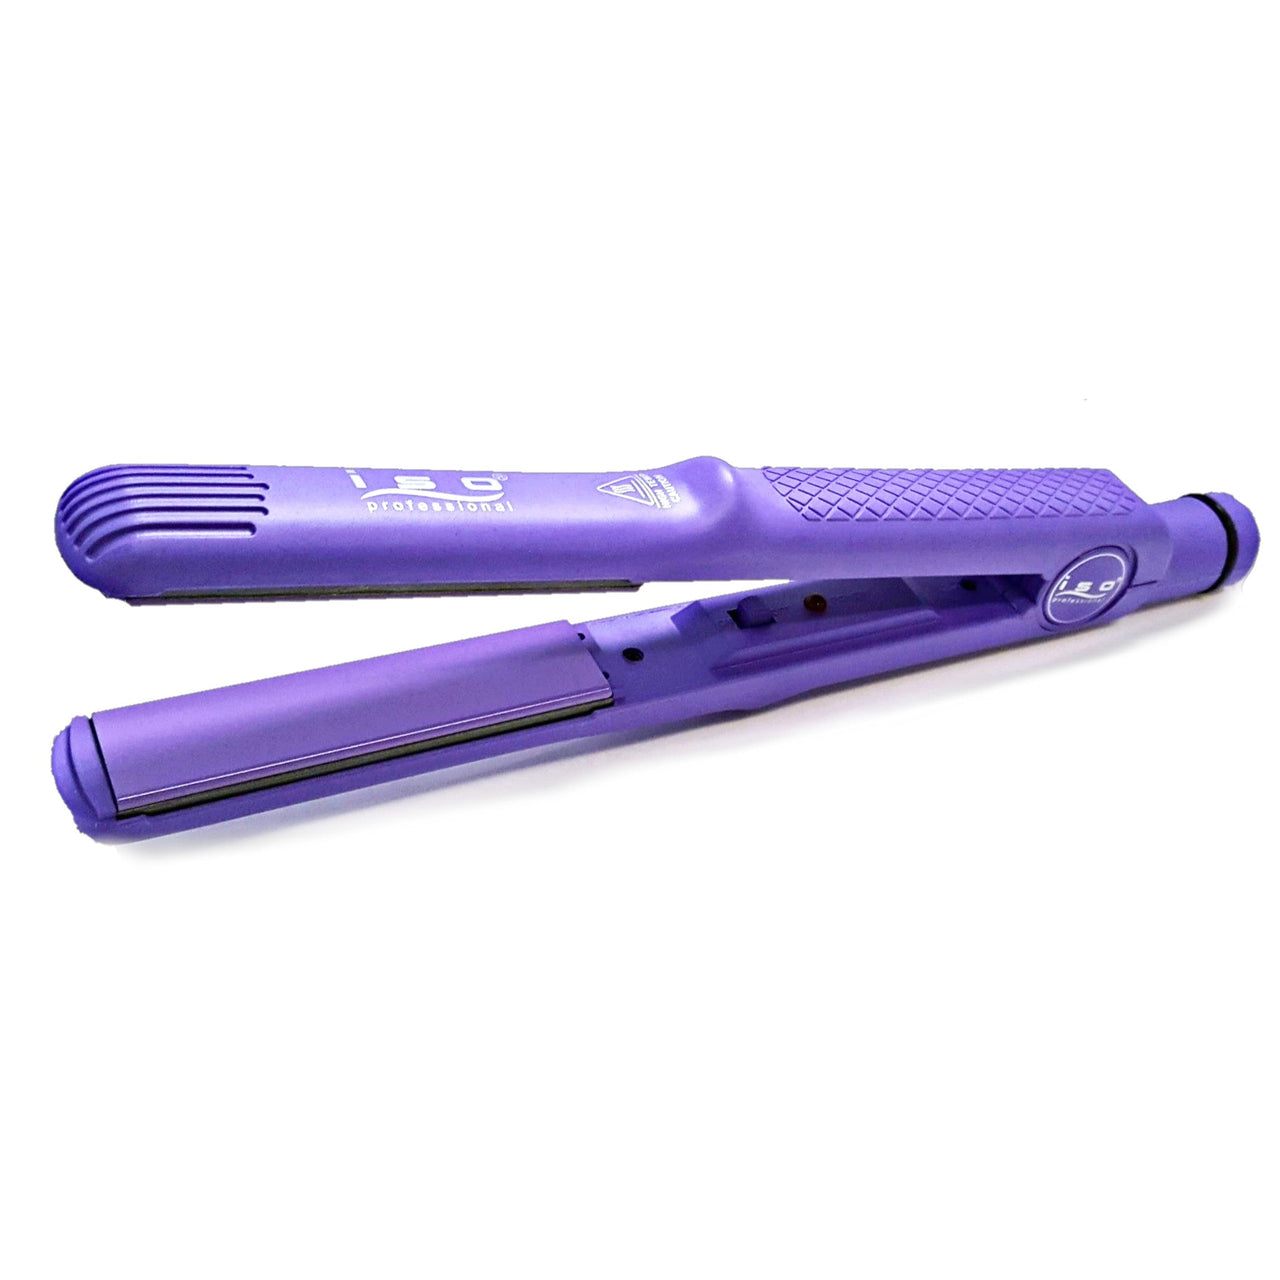 Turbo Silk 1.25" Tourmalin Ceramic Flat Iron Anti-Frizz Hair Straightener Purple